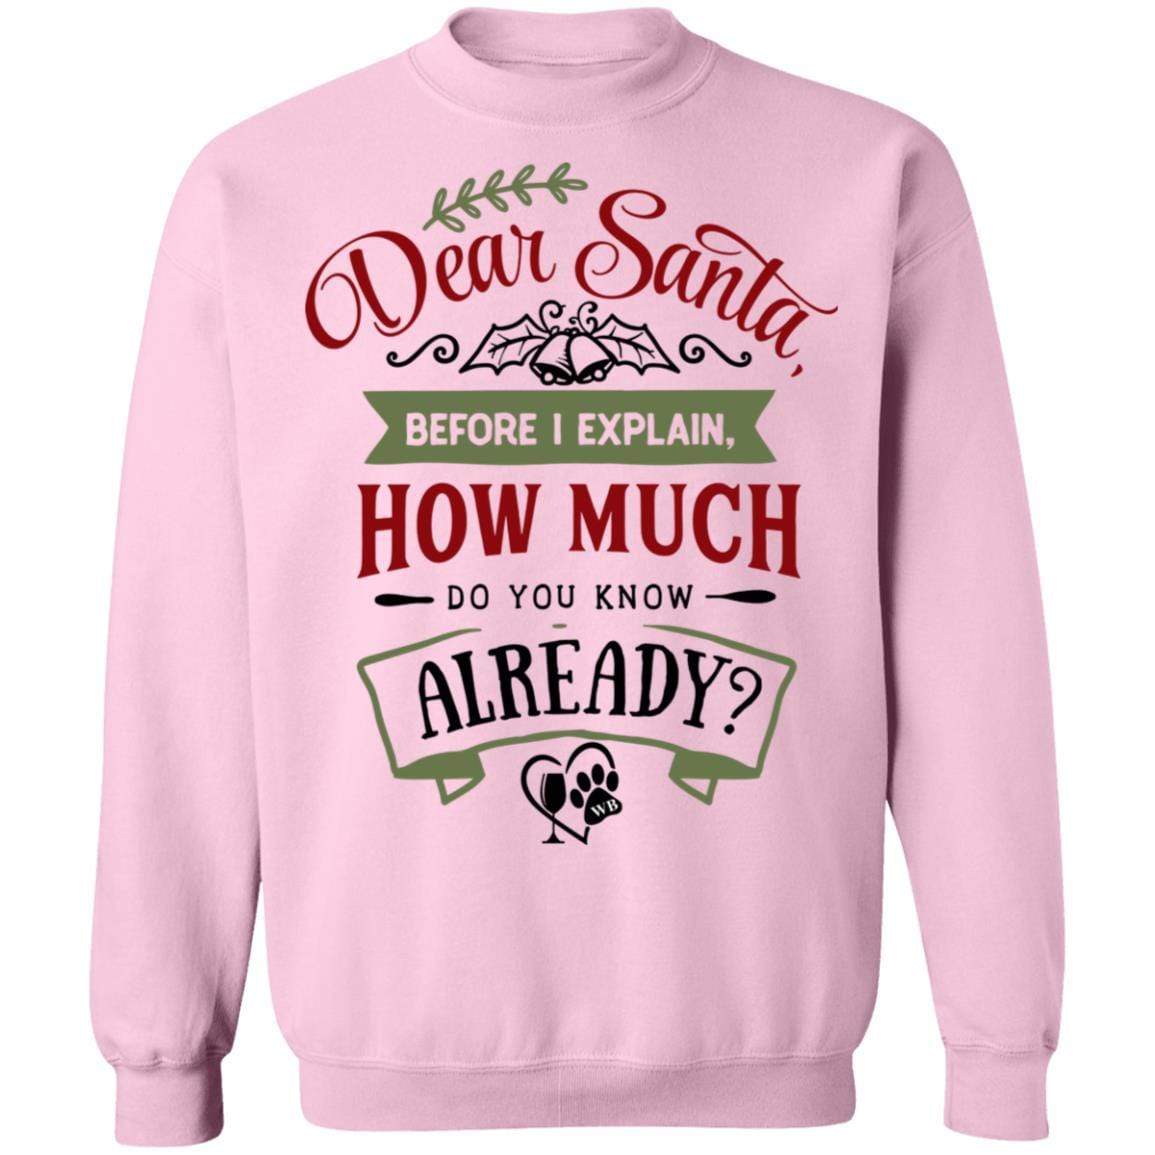 Sweatshirts Light Pink / S WineyBitches.Co "Dear Santa, Before I Explain, How Much Do You Already Know" Crewneck Pullover Sweatshirt  8 oz. WineyBitchesCo